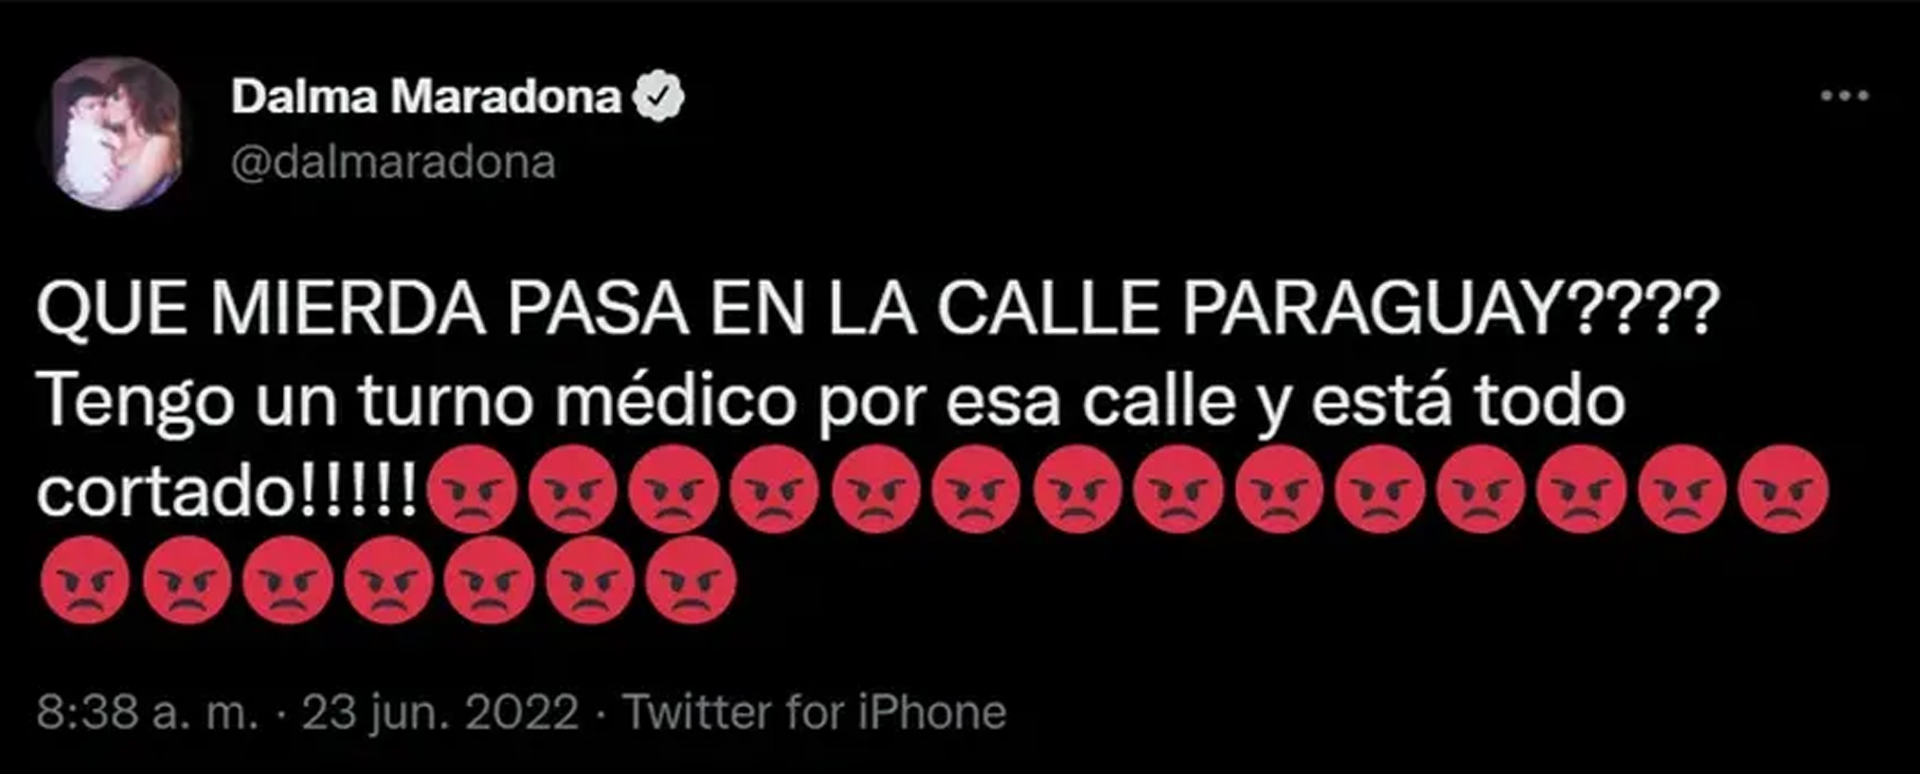 The tweet that Dalma Maradona deleted (Photo: Twitter)